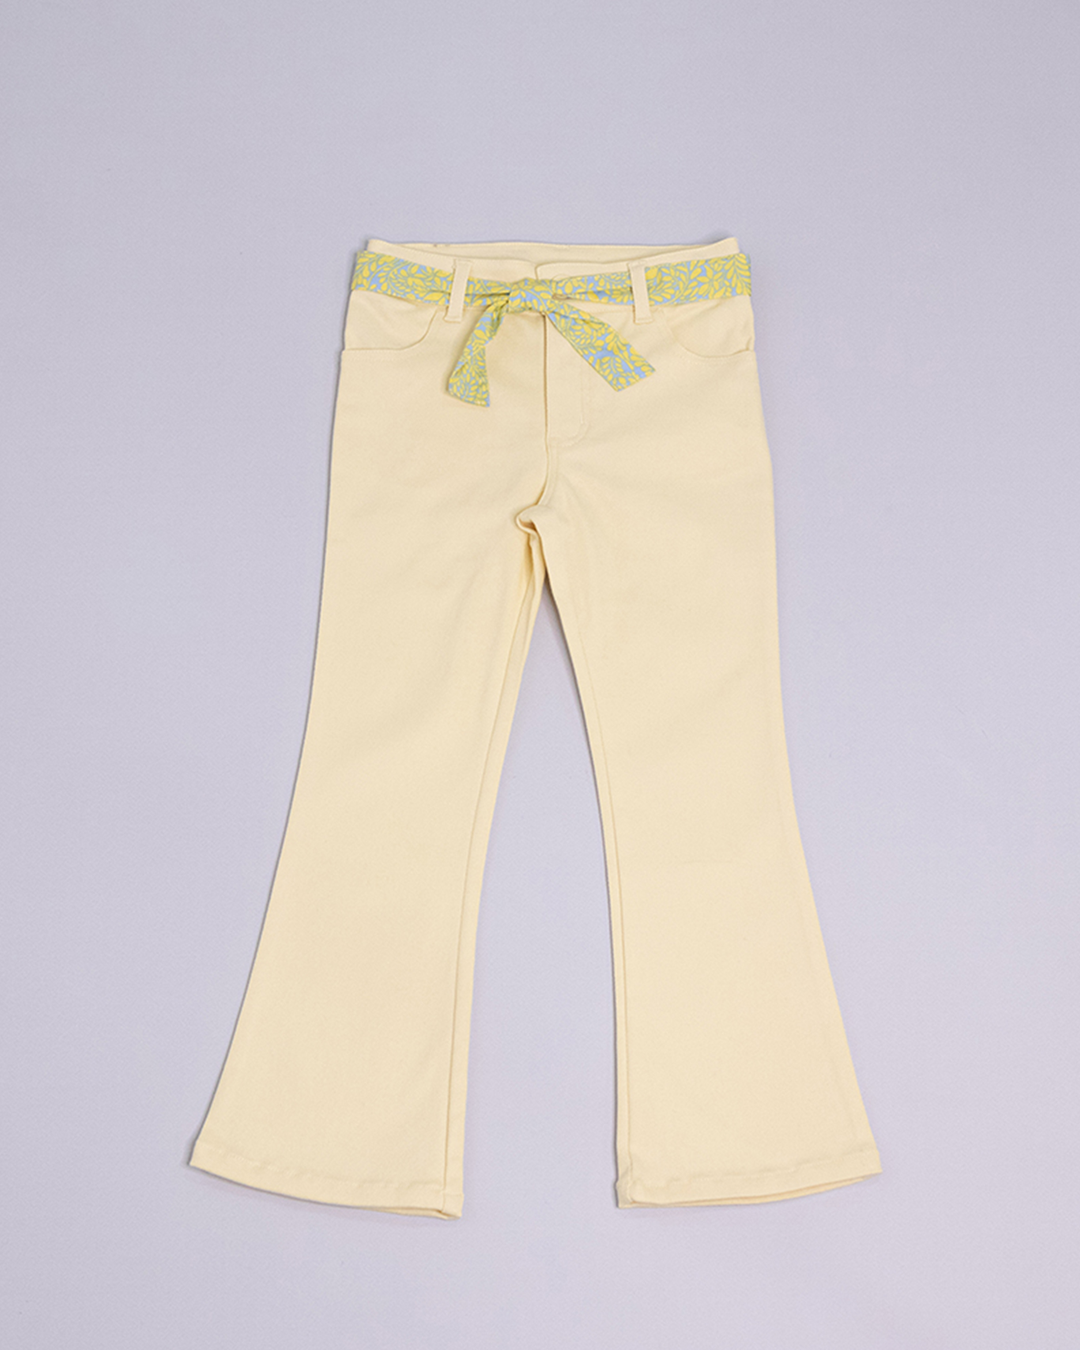 Pantalón bota ancha de color amarillo con cinturón estampado